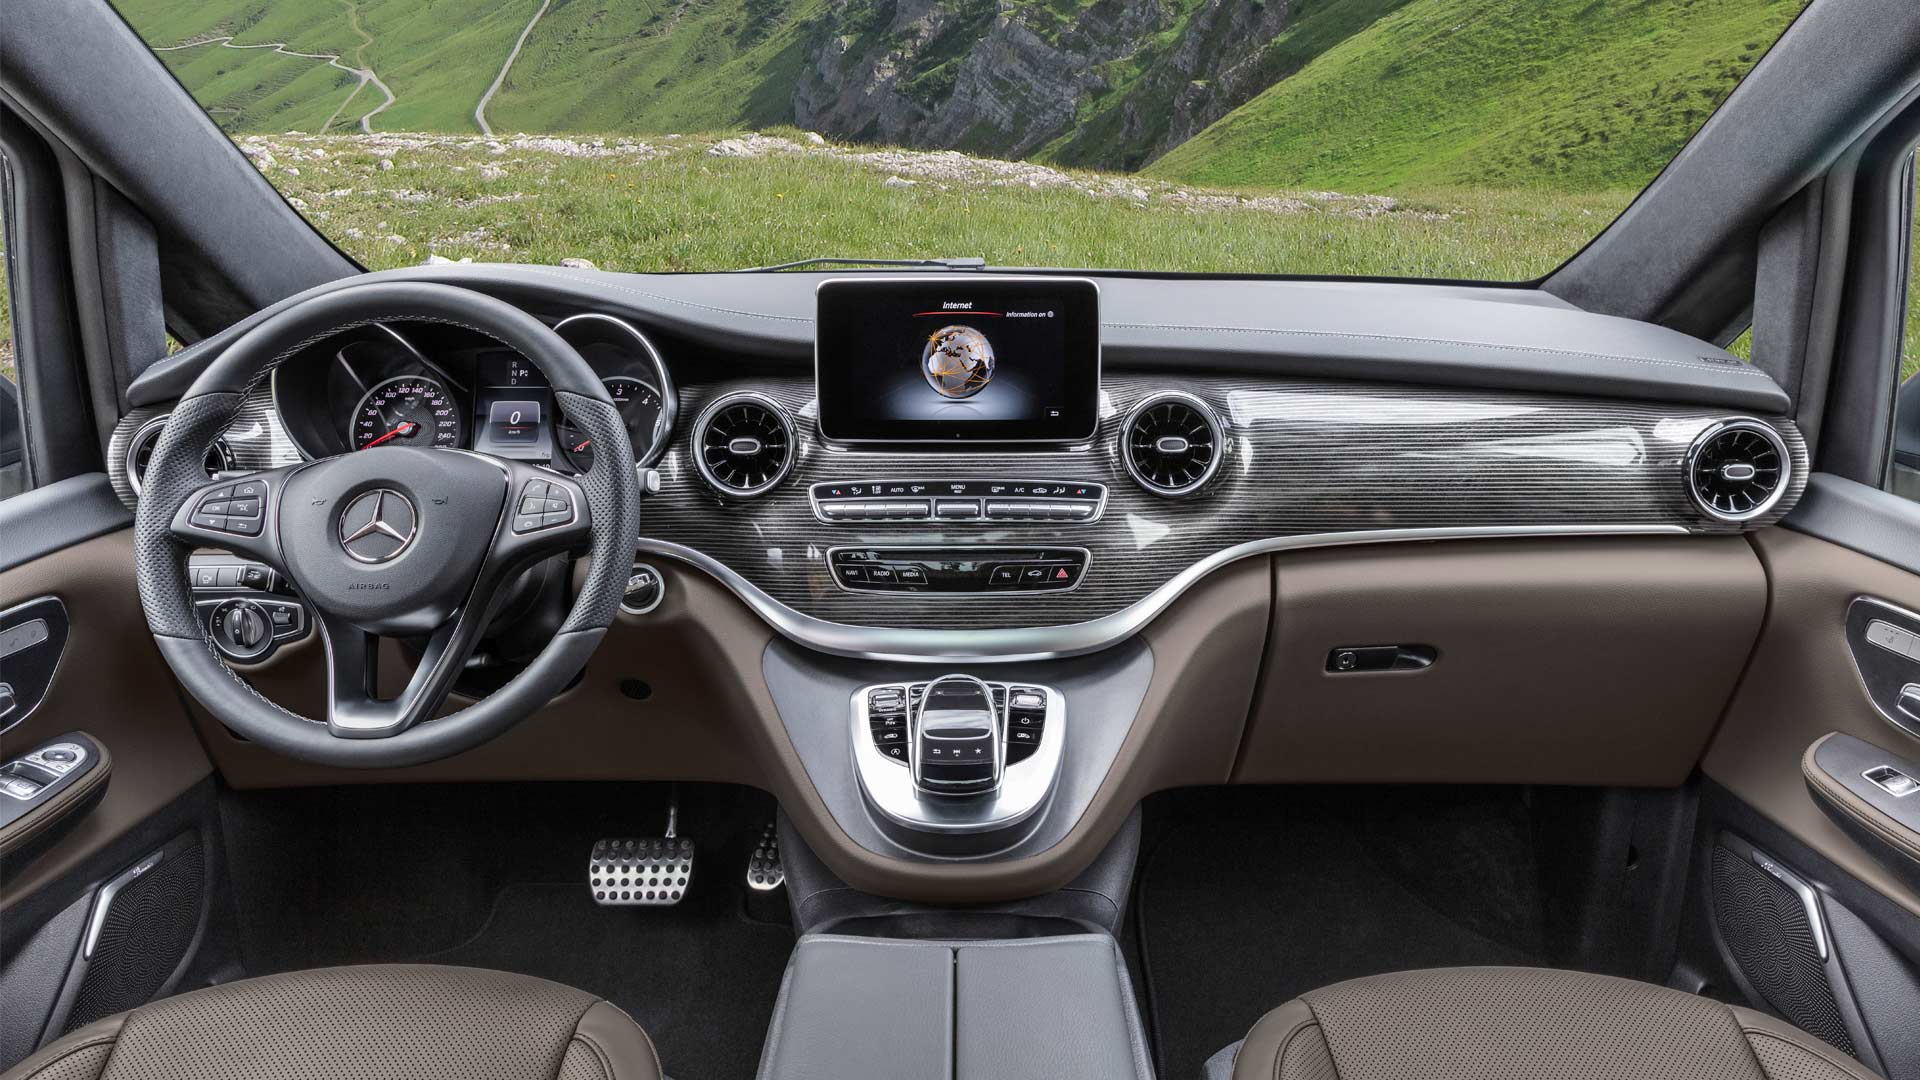 2019-Mercedes-Benz-V-Class-facelift-Interior Tartufo Nappa leather_2